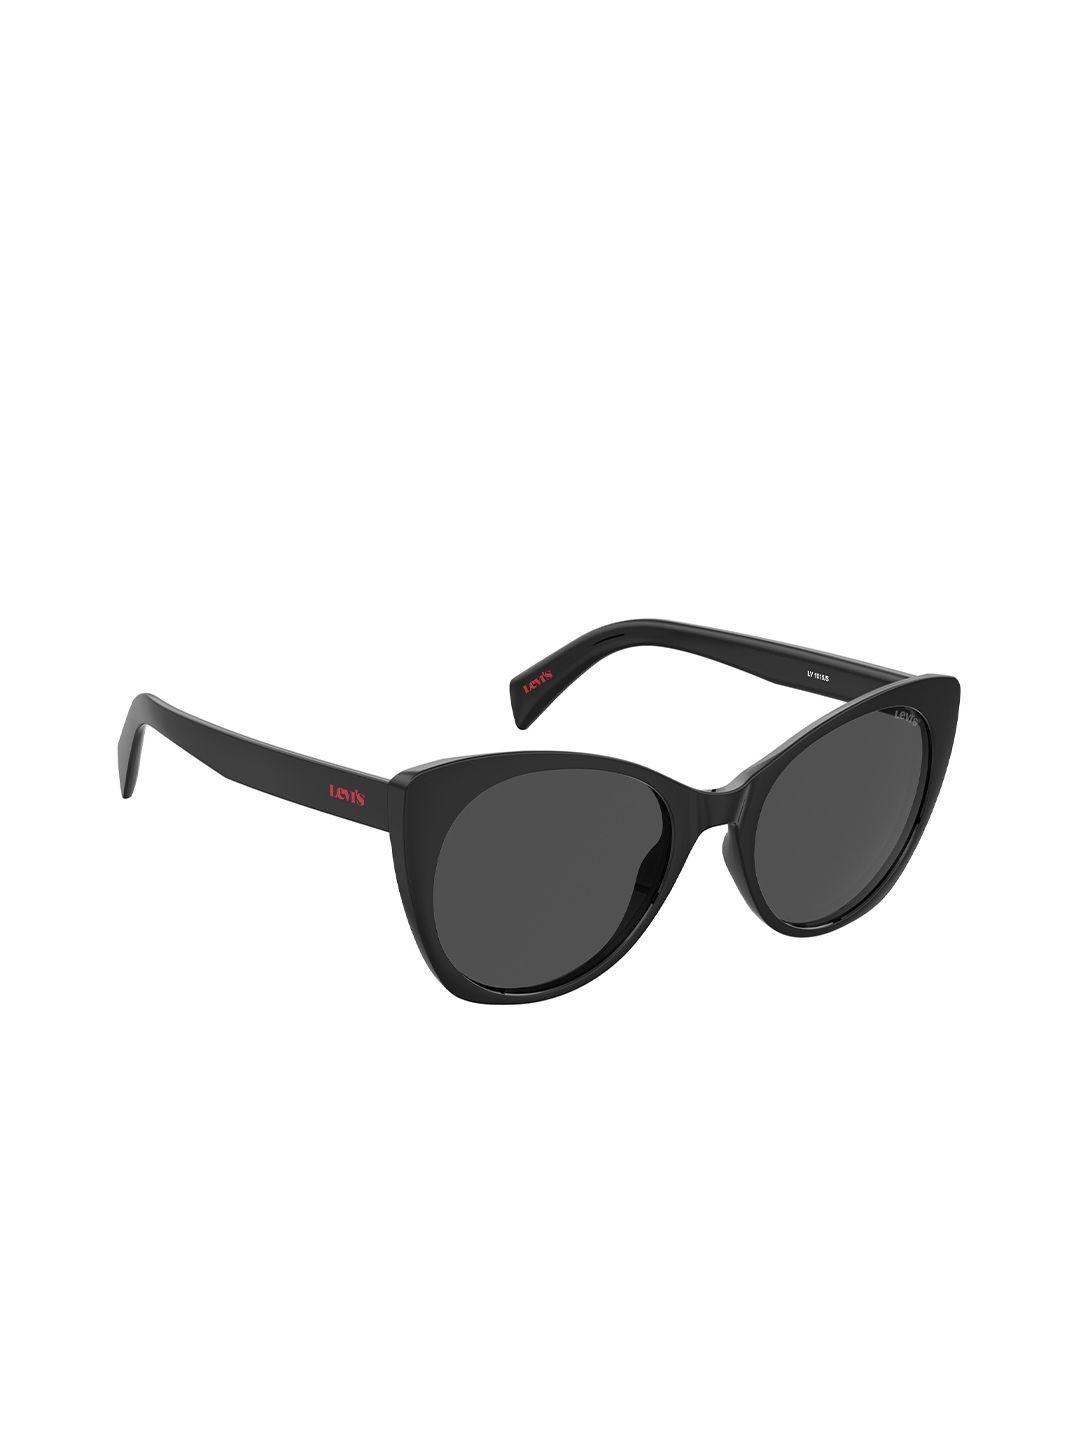 levis women cateye sunglasses with polarised lens